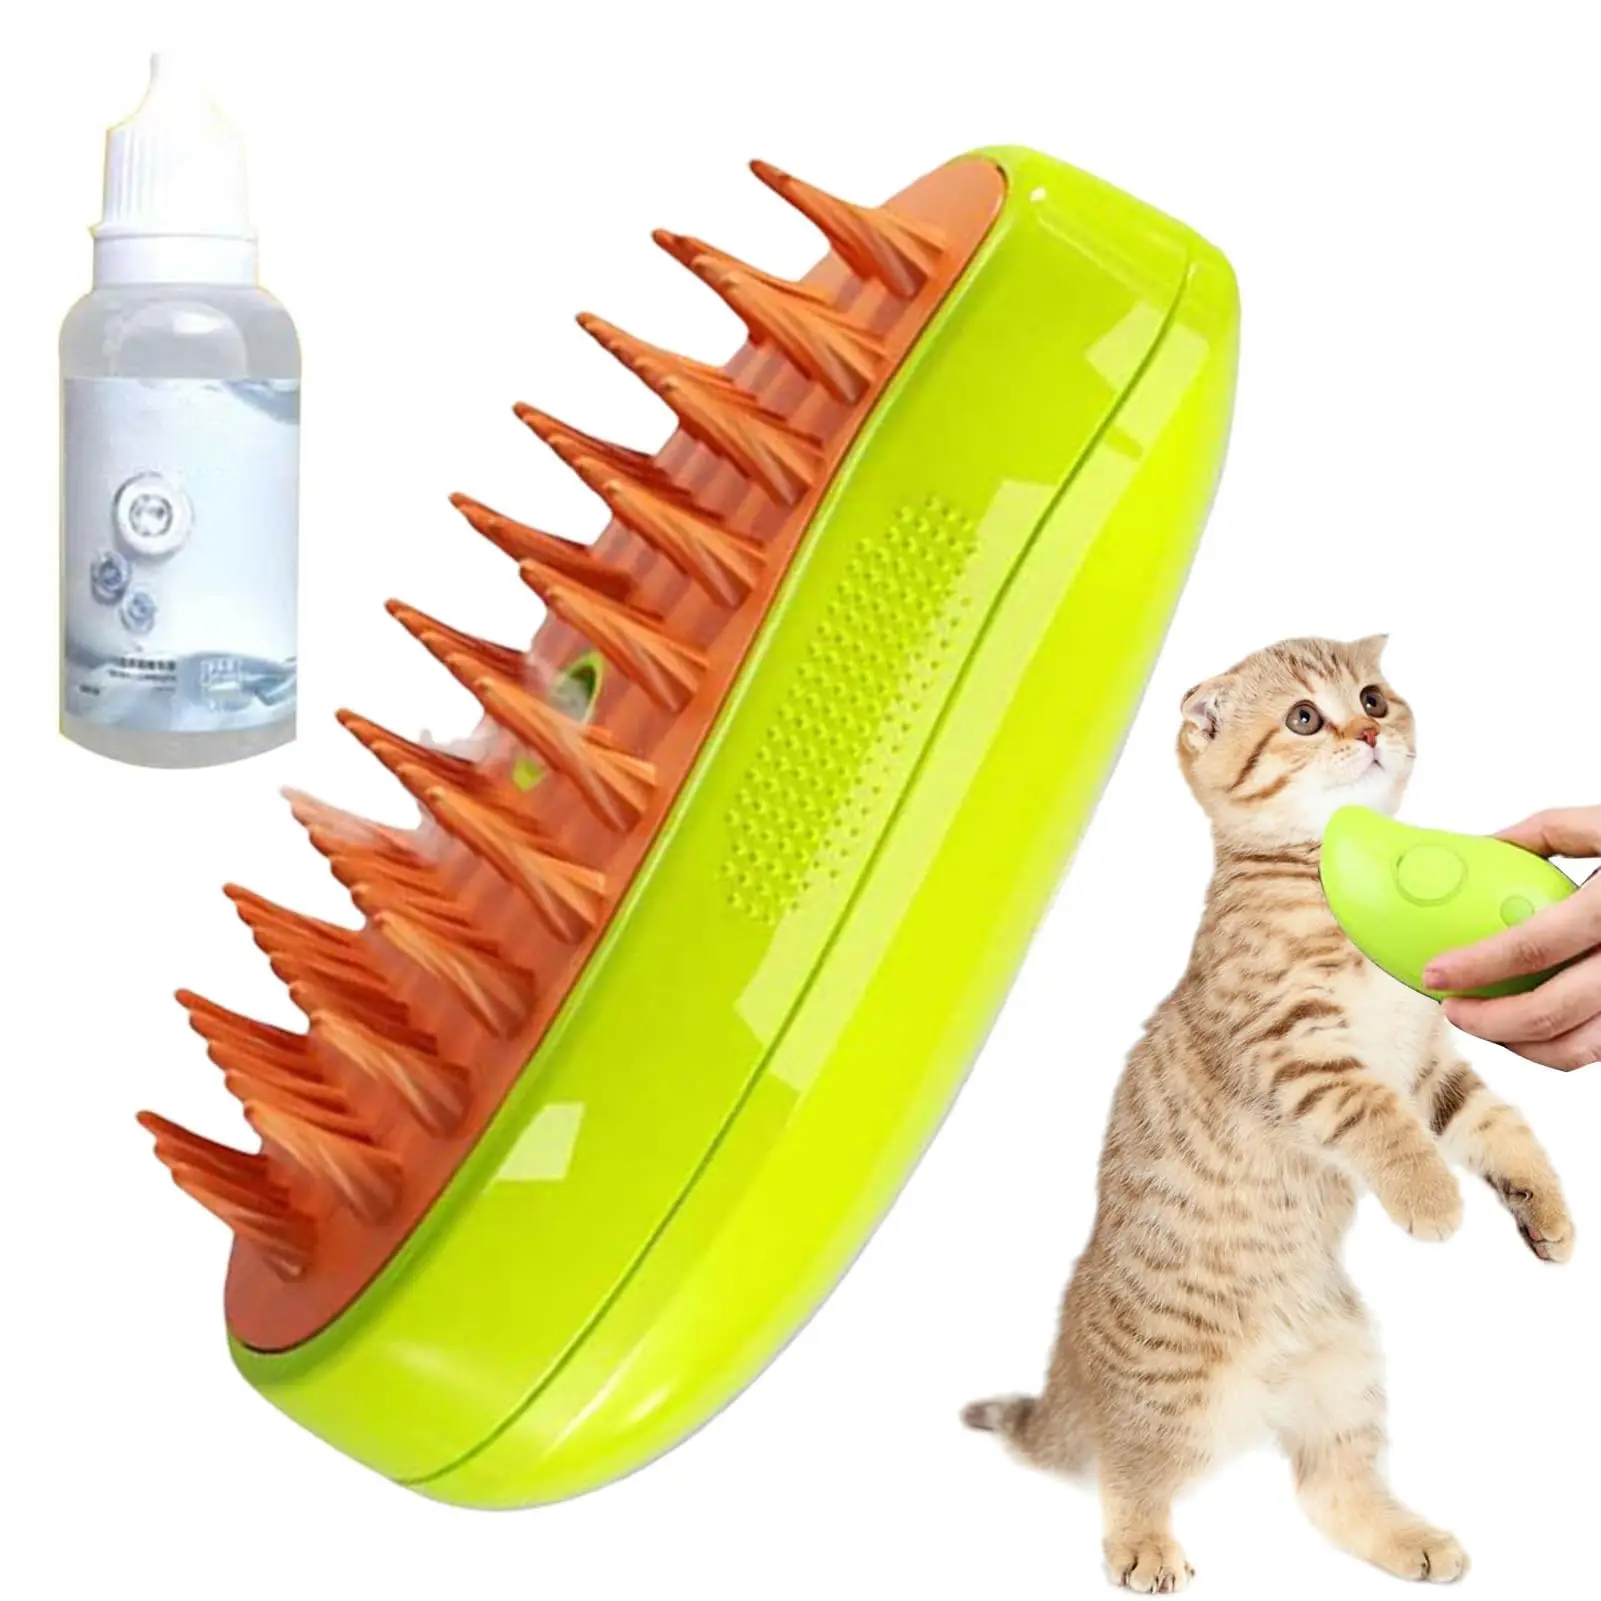 

Cat Dog Comb Pet Grooming Brush Long Hair Short Hair Remove Tangle and Shedding Hair Brush Spray Massage Steaming Cat Brush